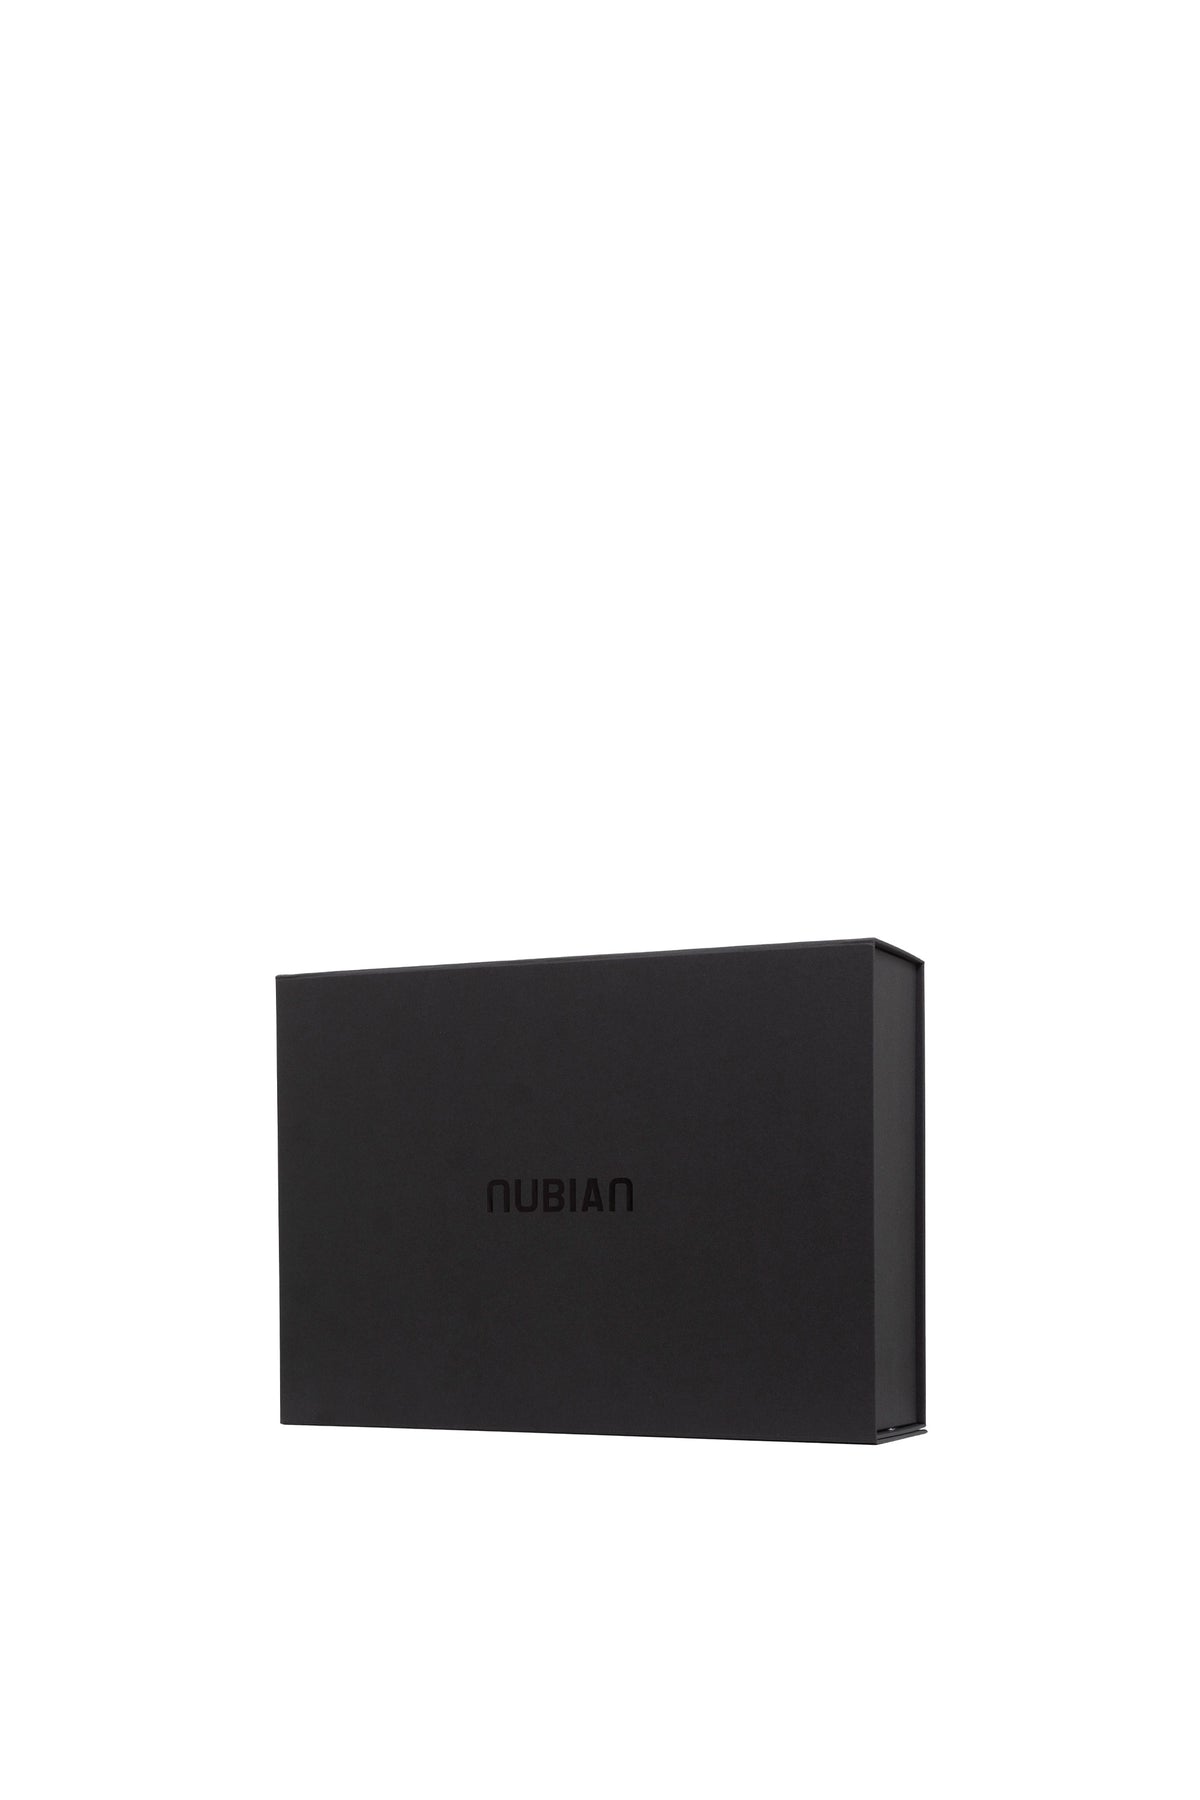 NUBIAN GIFT BOX - M / BLK